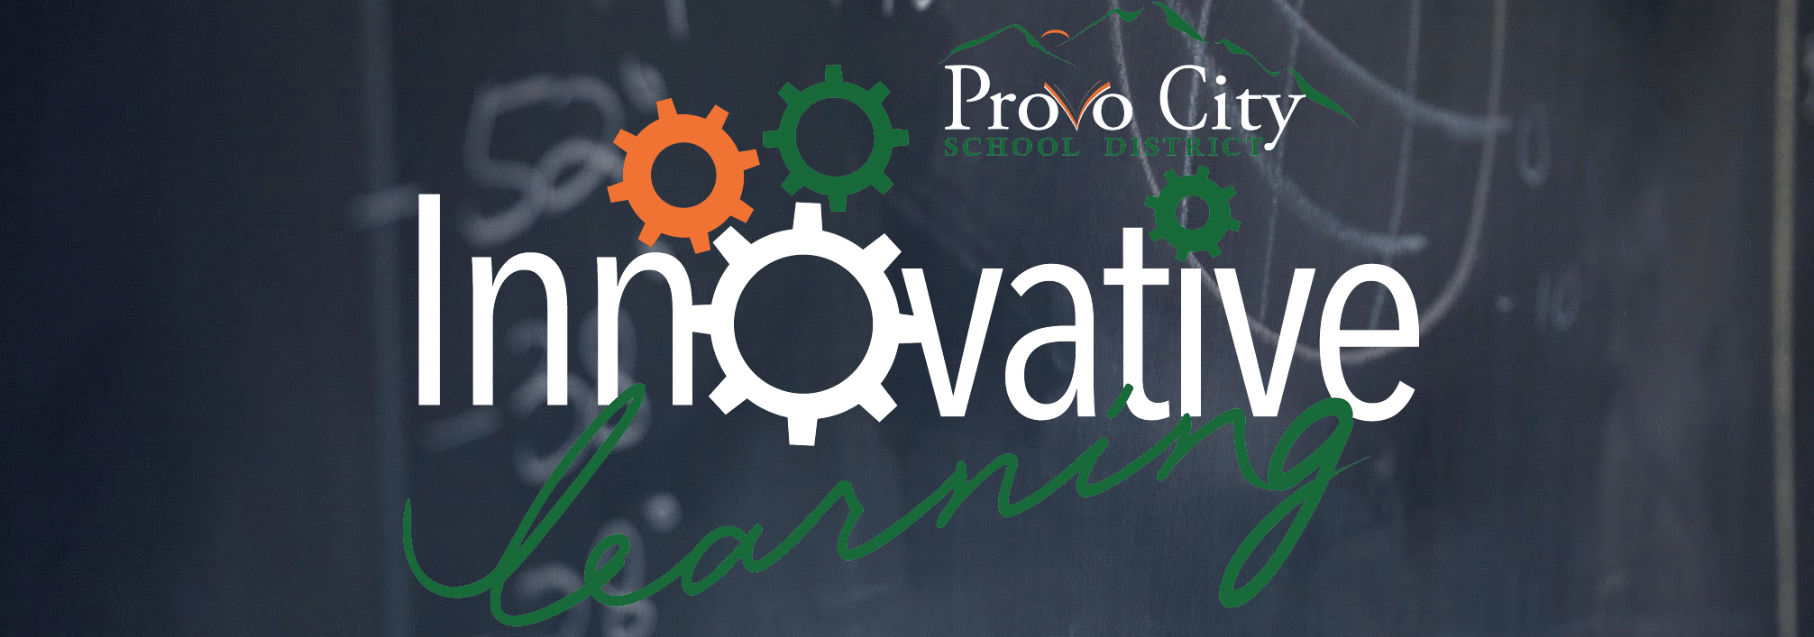 Innovative learning logo over a chalkboard background